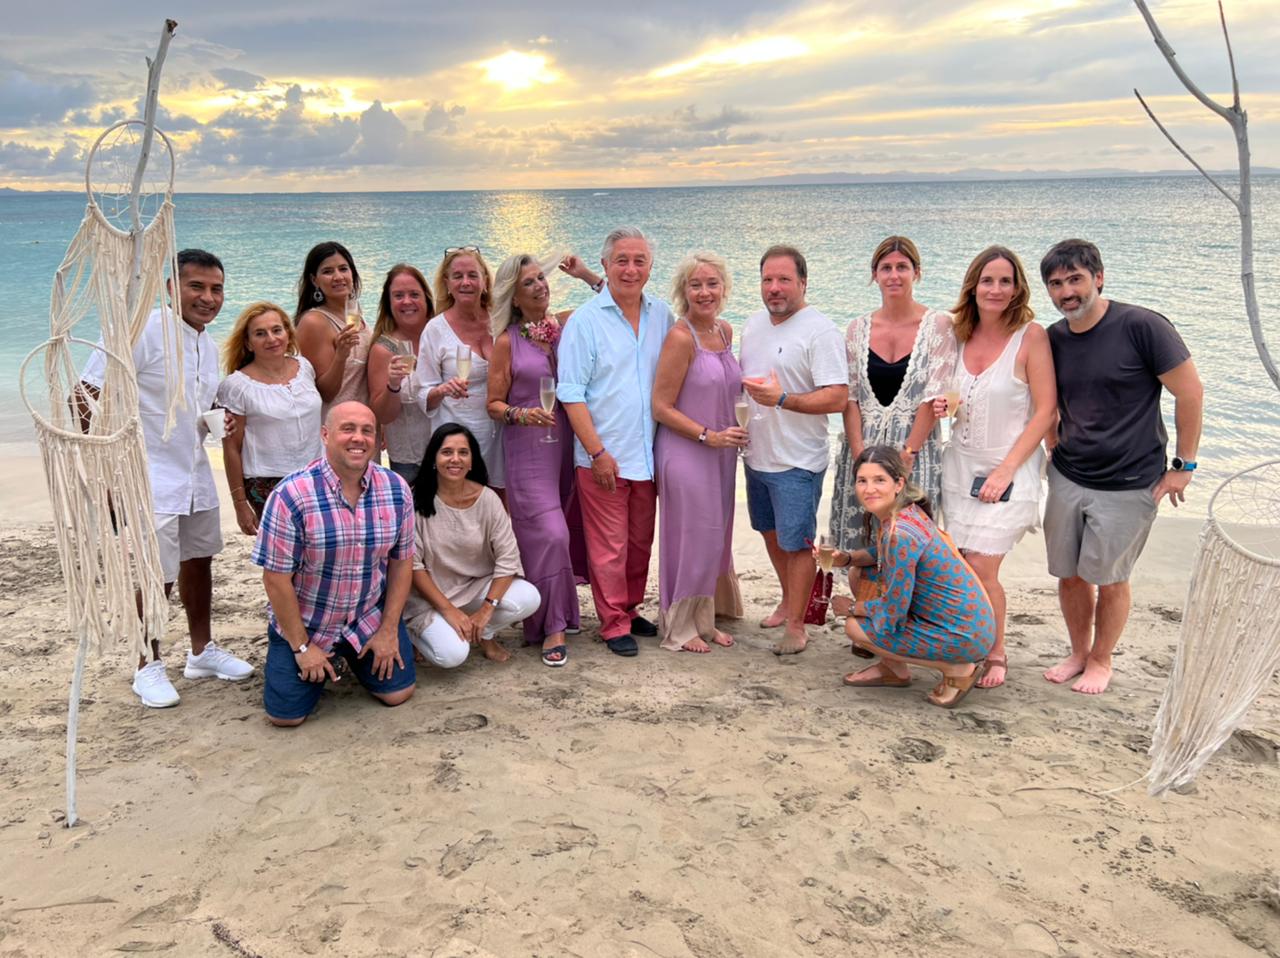 Club Med celebró su tradicional evento “Top Experts” en Miches, Punta Cana